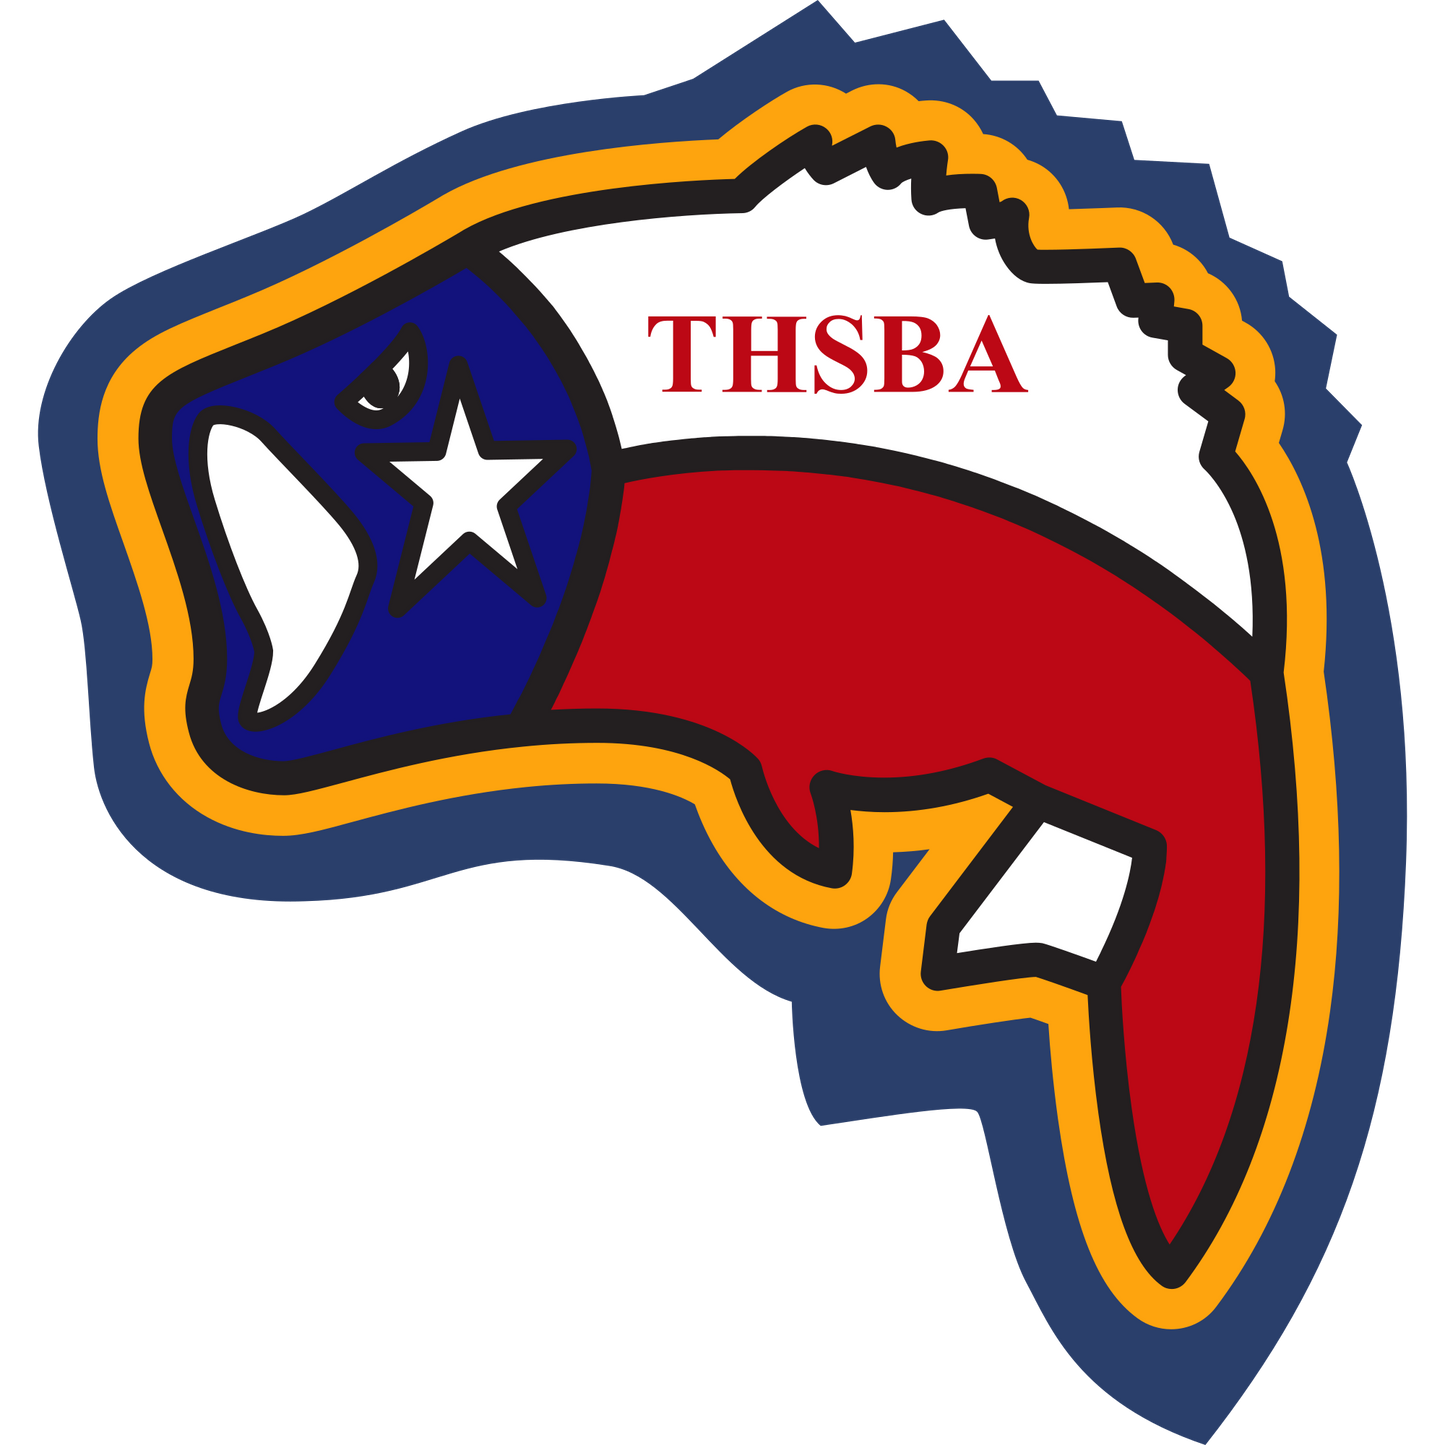 THSBA Sleeve Patch